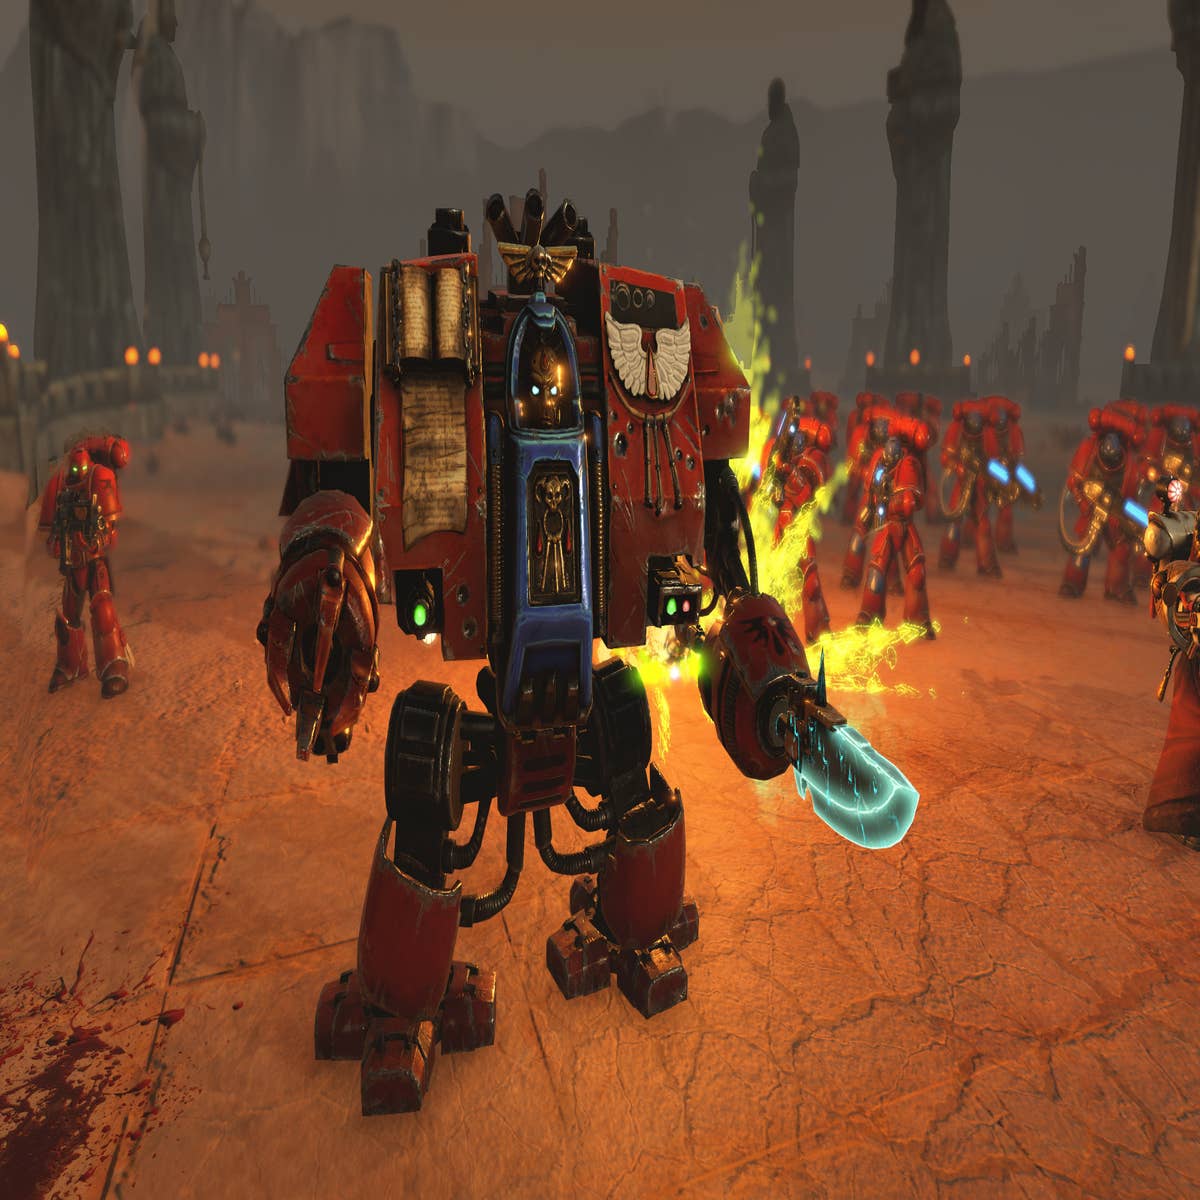 Warhammer 40K Free-Roam VR Game Announced - VRScout